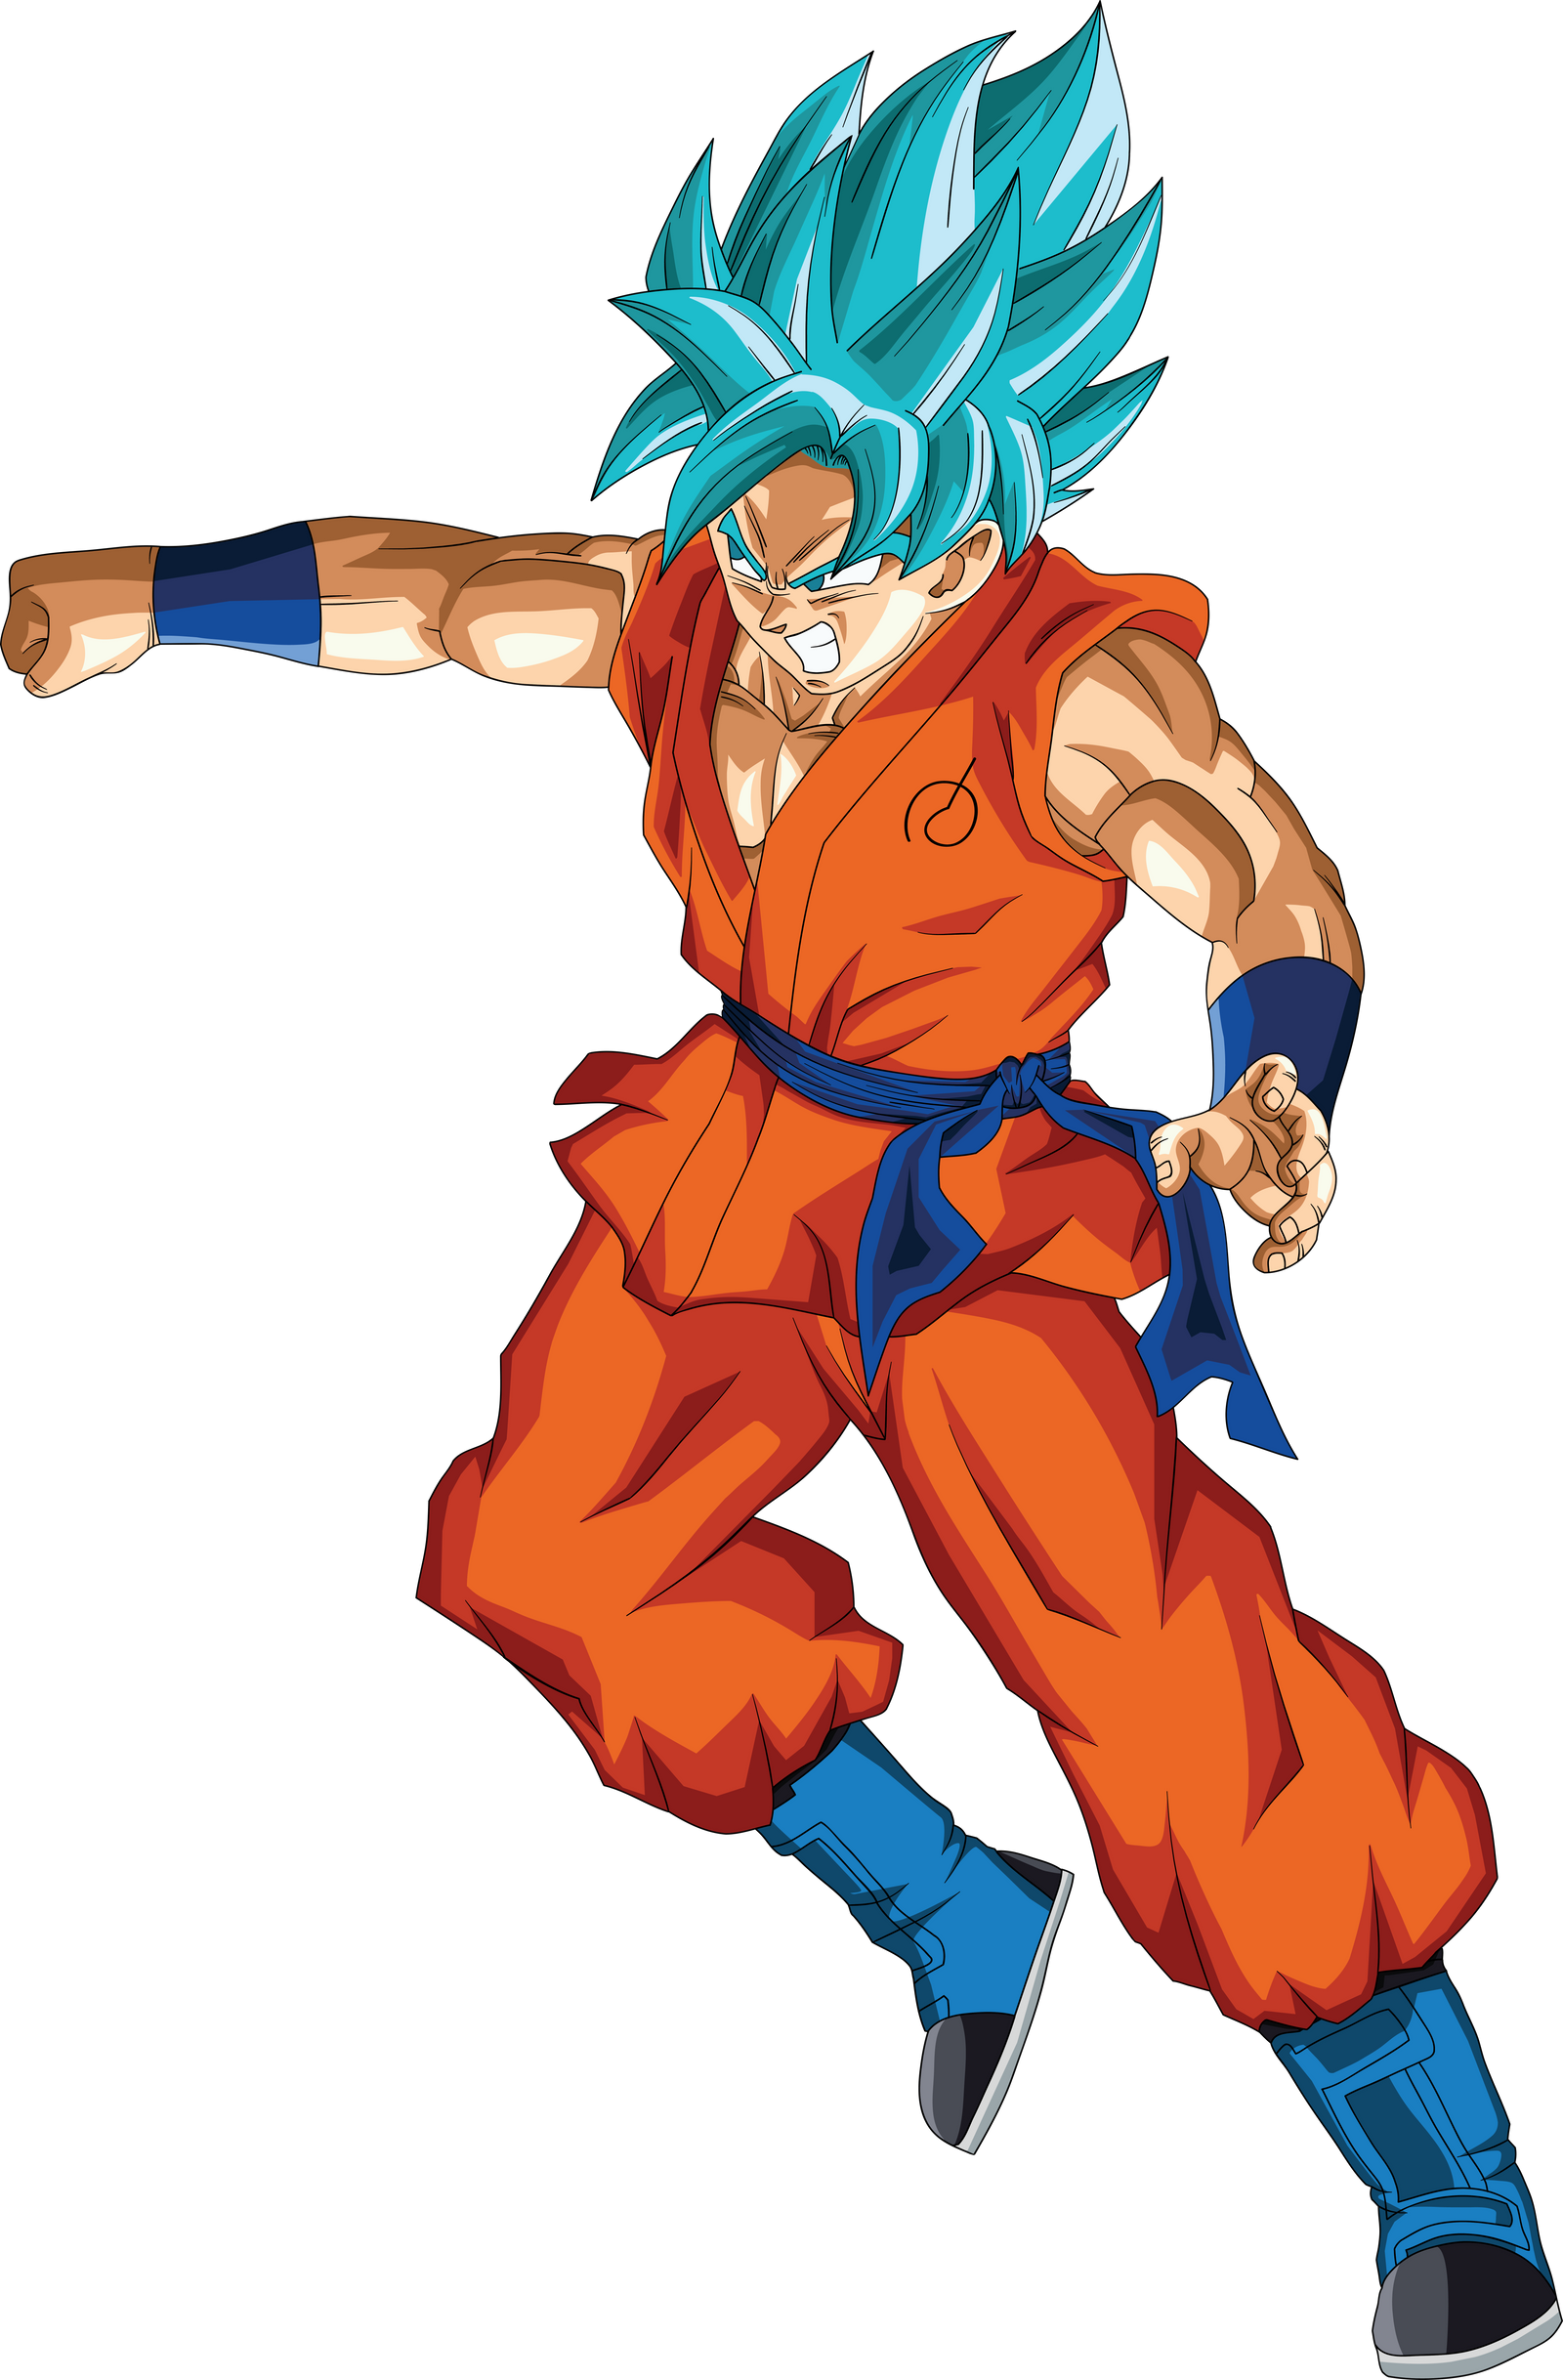 Super Saiyan 3 Goku Transformed by DragonBallAffinity on DeviantArt